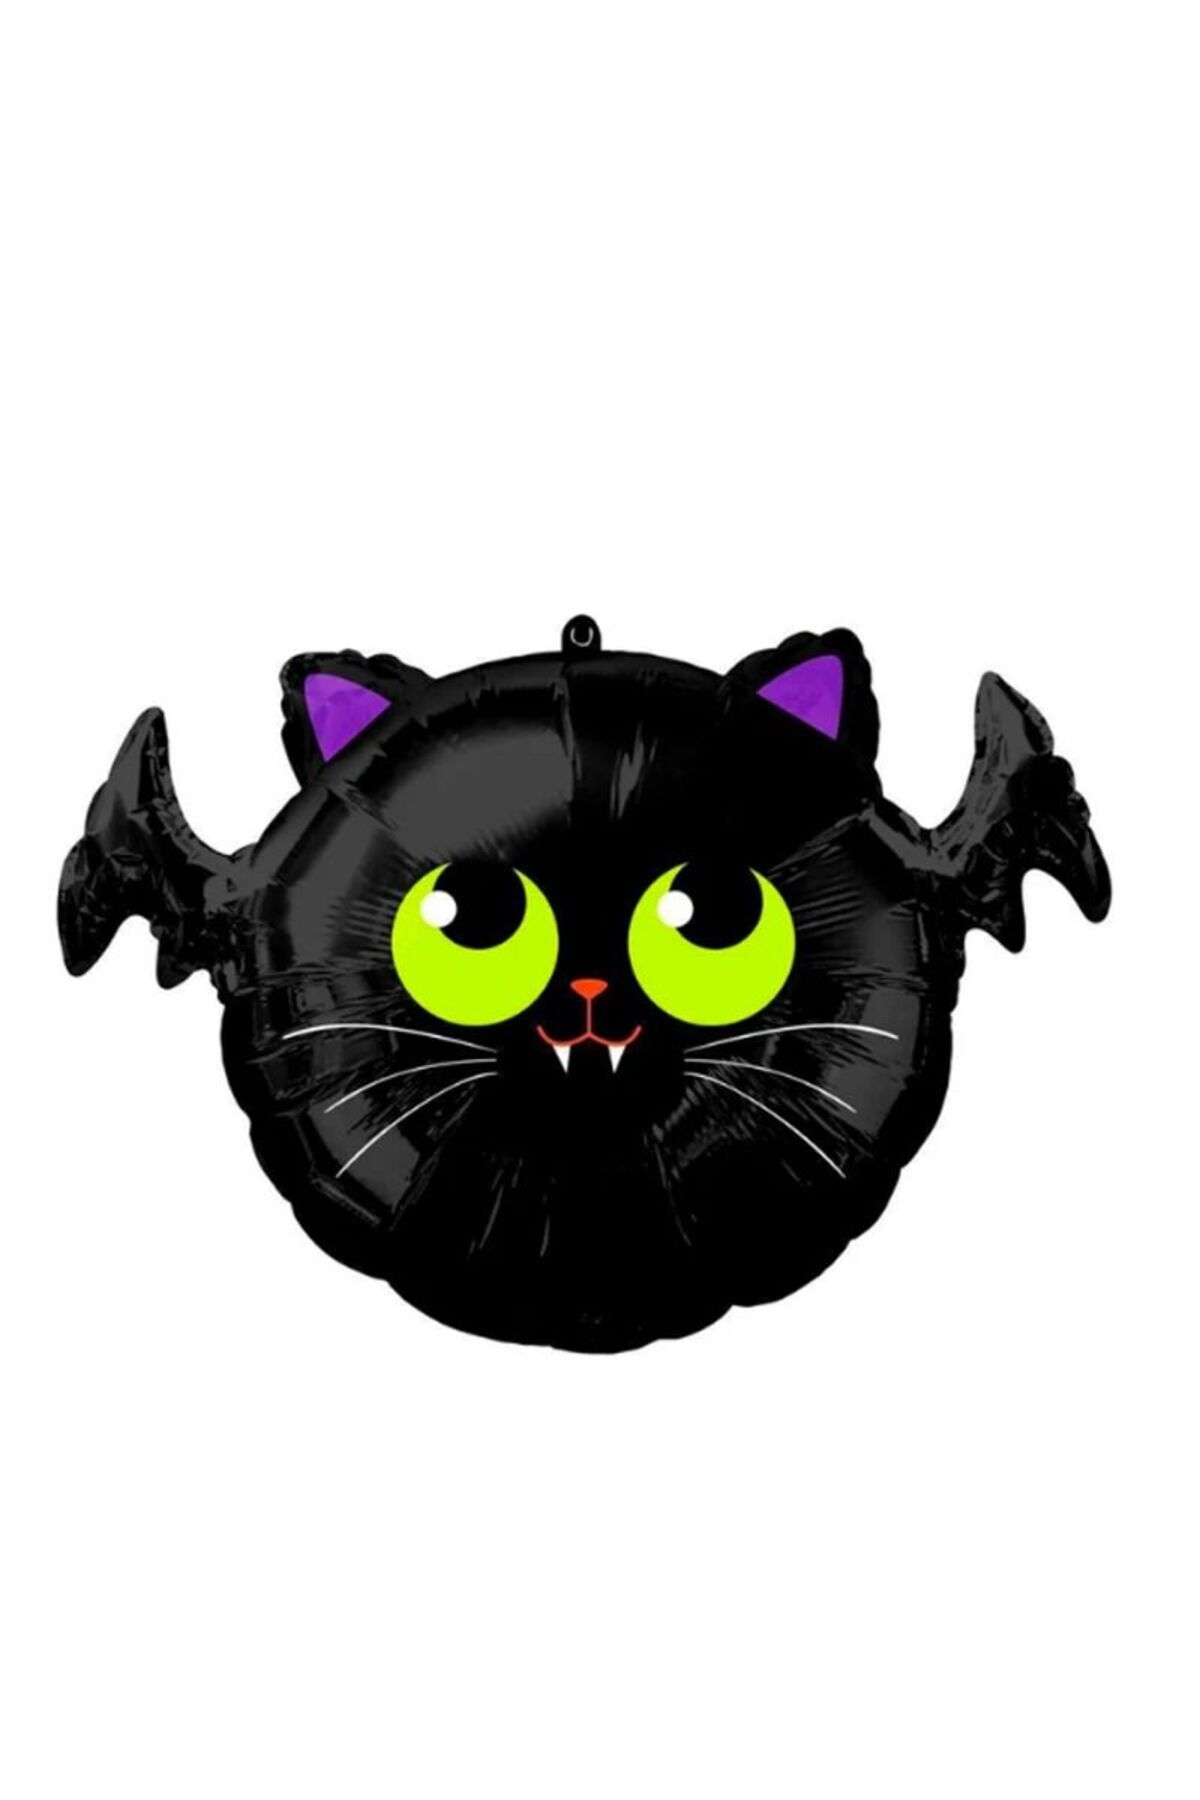 partidolu Halloween Sevimli Siyah Kedi Yarasa Şeklinde Folyo Balon 75 X 60 Cm 1 Adet